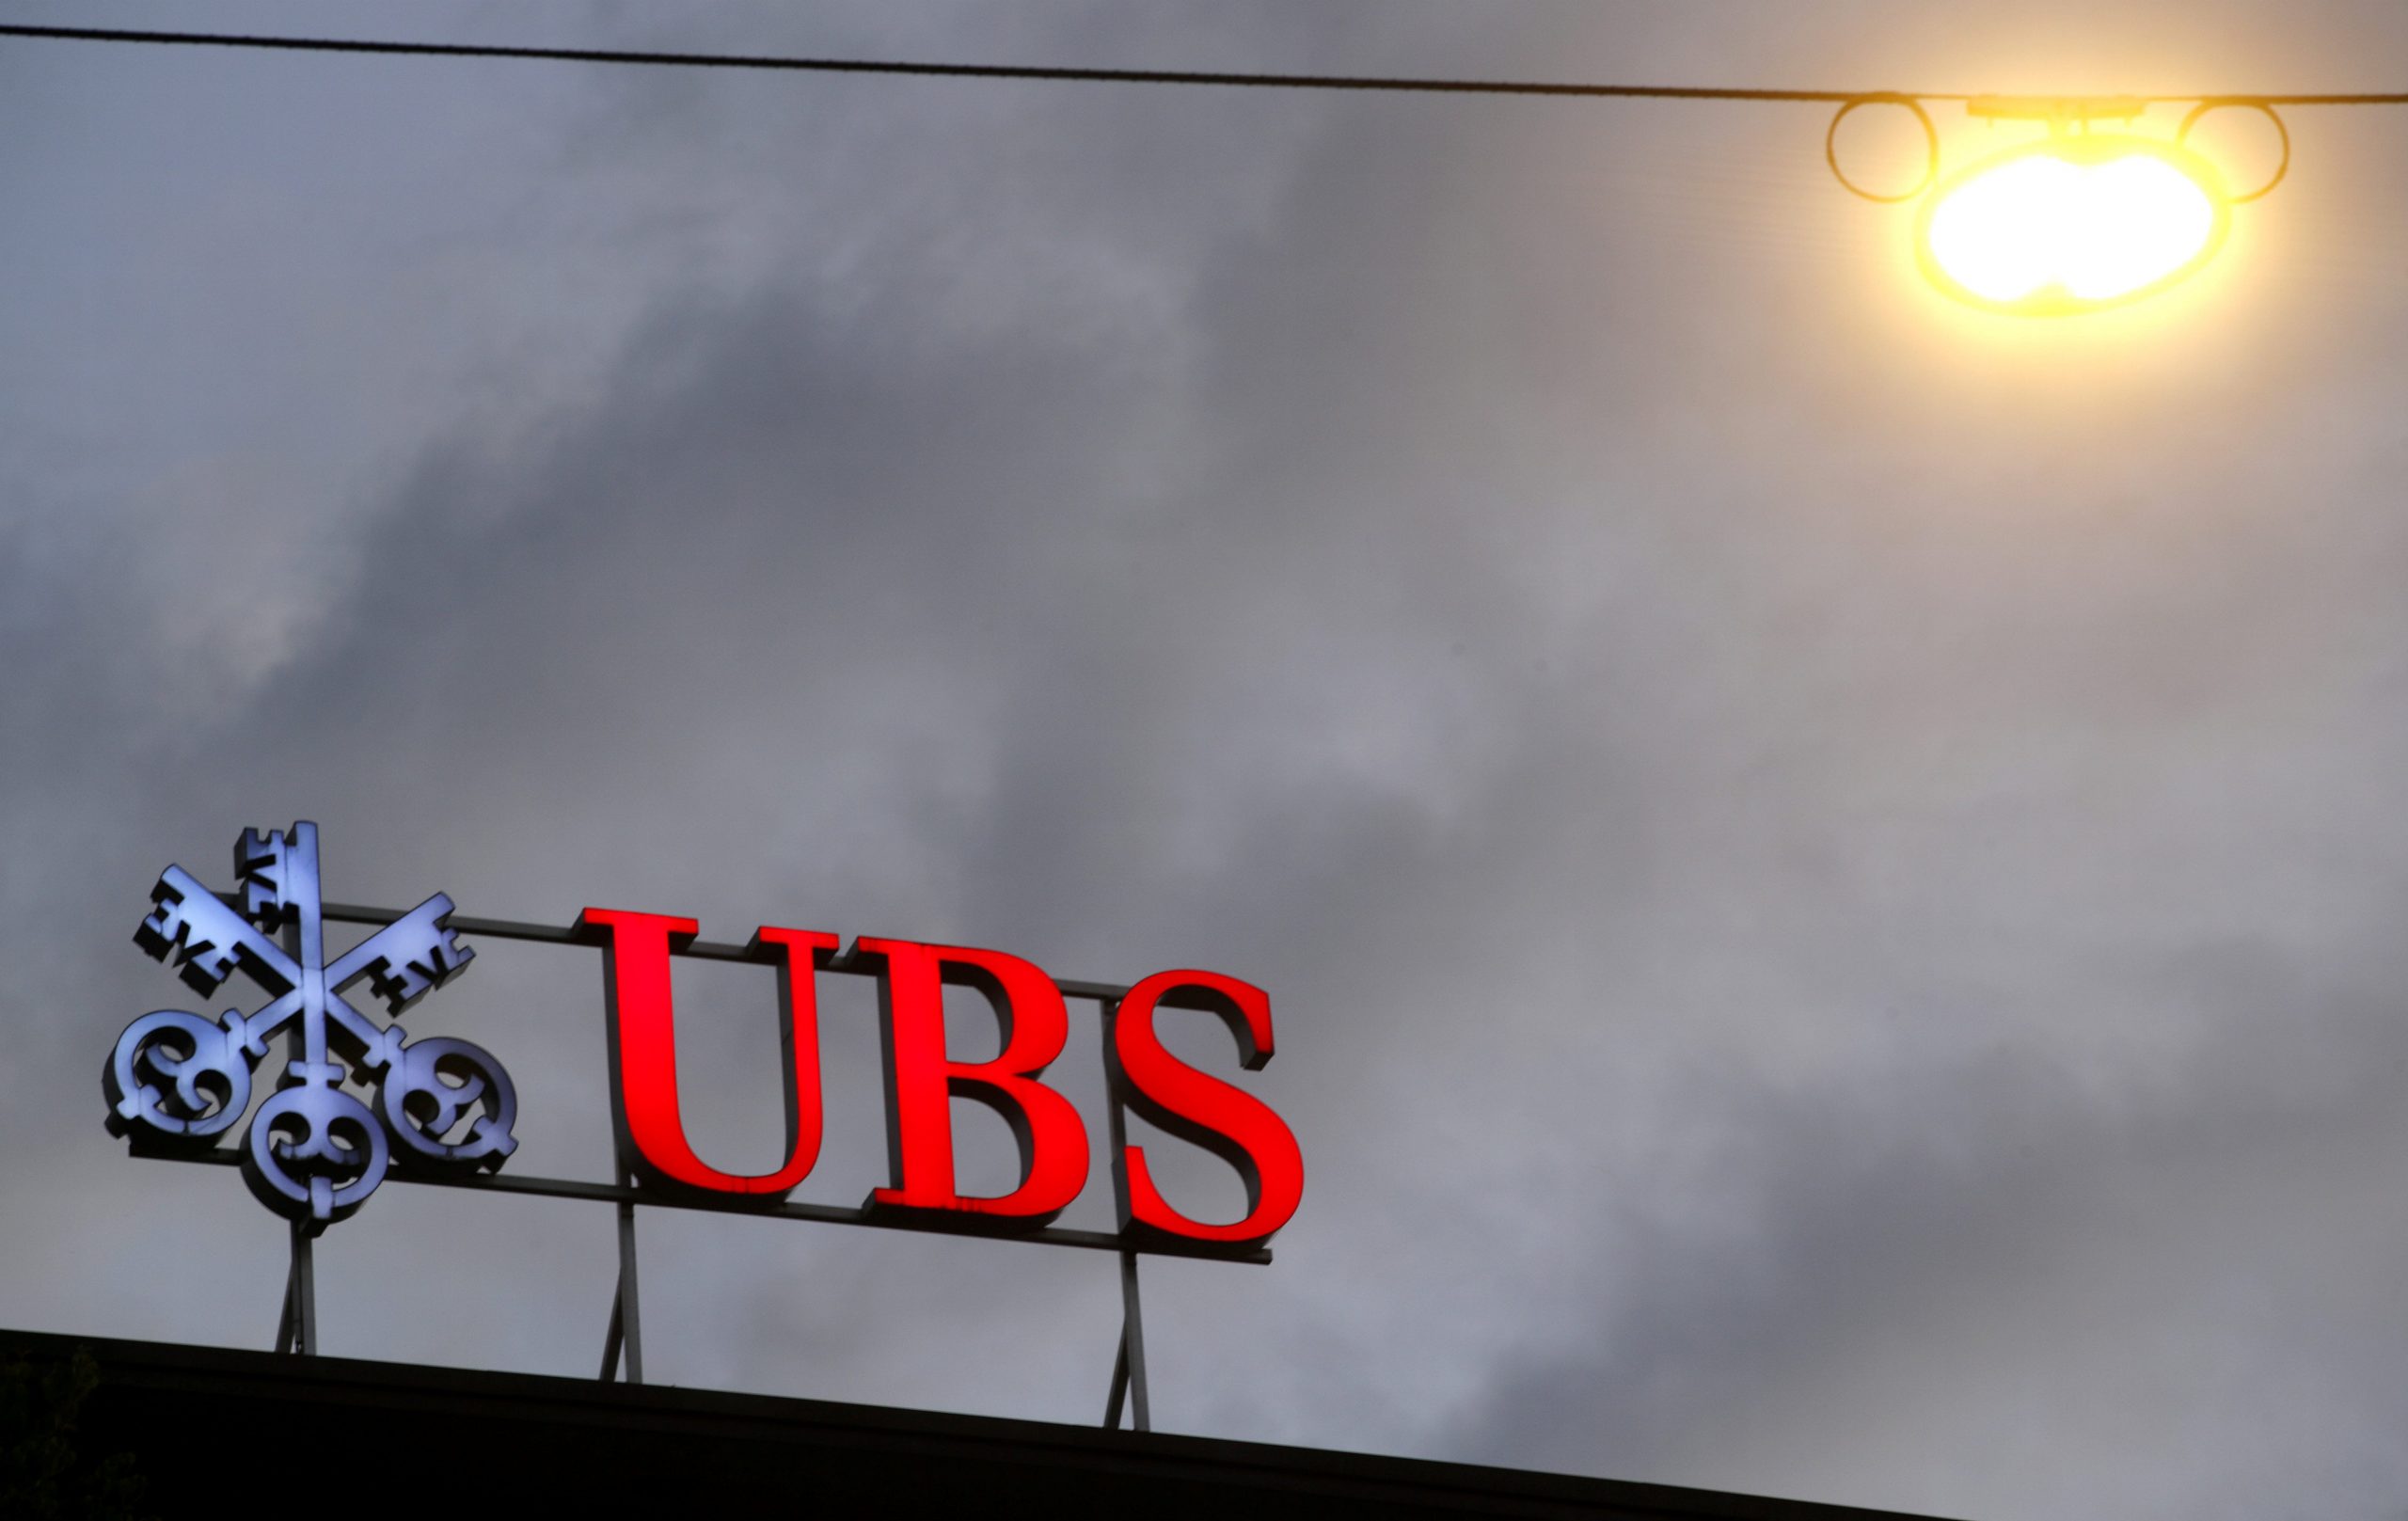 FILE PHOTO: The logo of Swiss bank UBS is seen at a branch office in Zurich, Switzerland June 22, 2020. REUTERS/Arnd Wiegmann